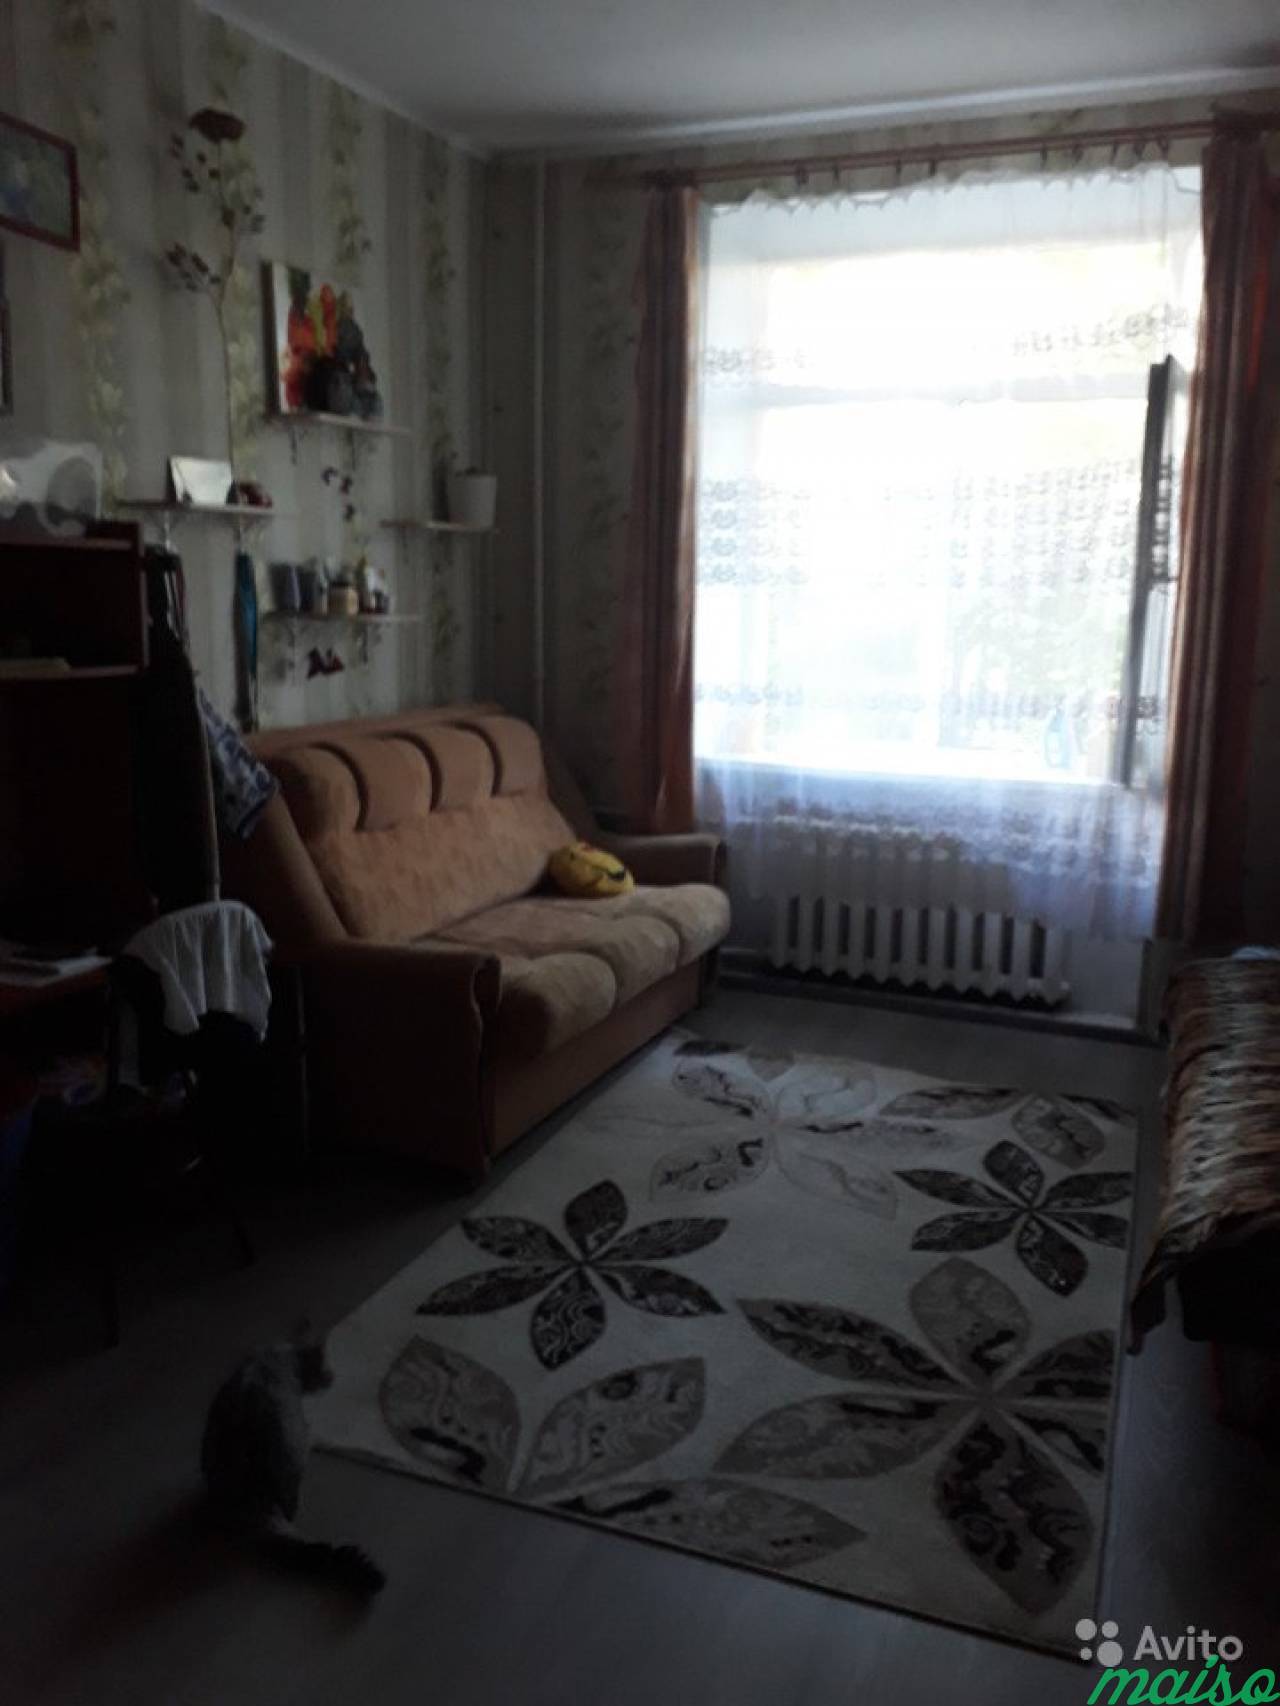 Комната 16.6 м² в 3-к, 1/5 эт. в Санкт-Петербурге. Фото 1